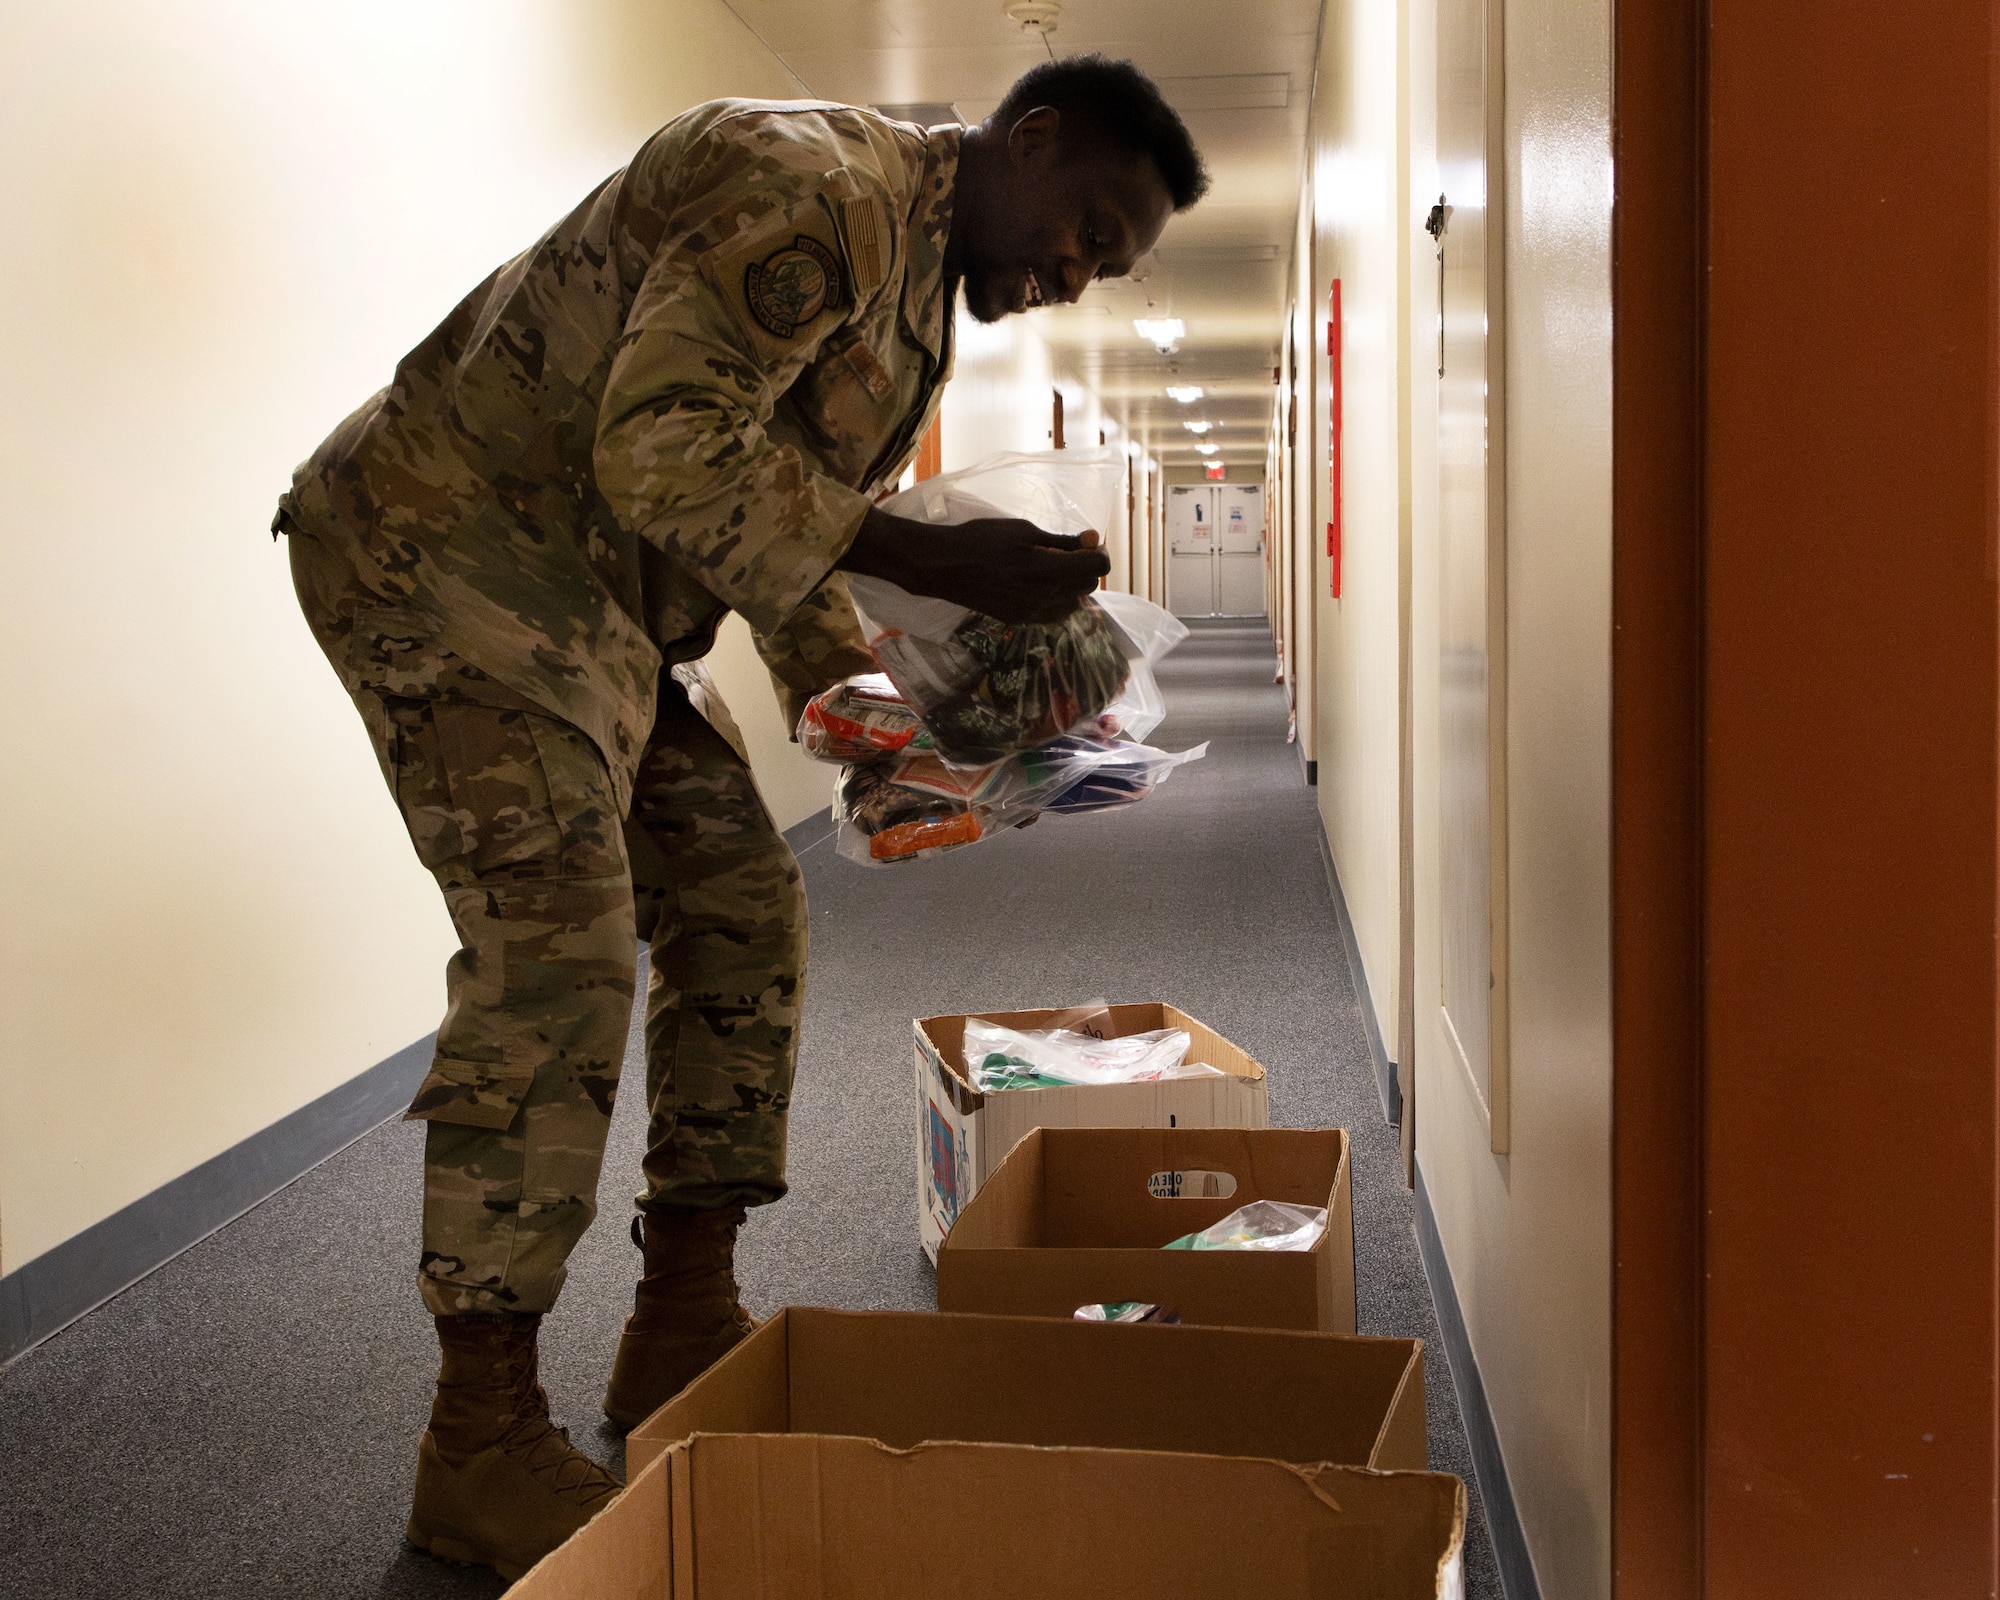 A U.S. Air Force service member unpacks gifts.